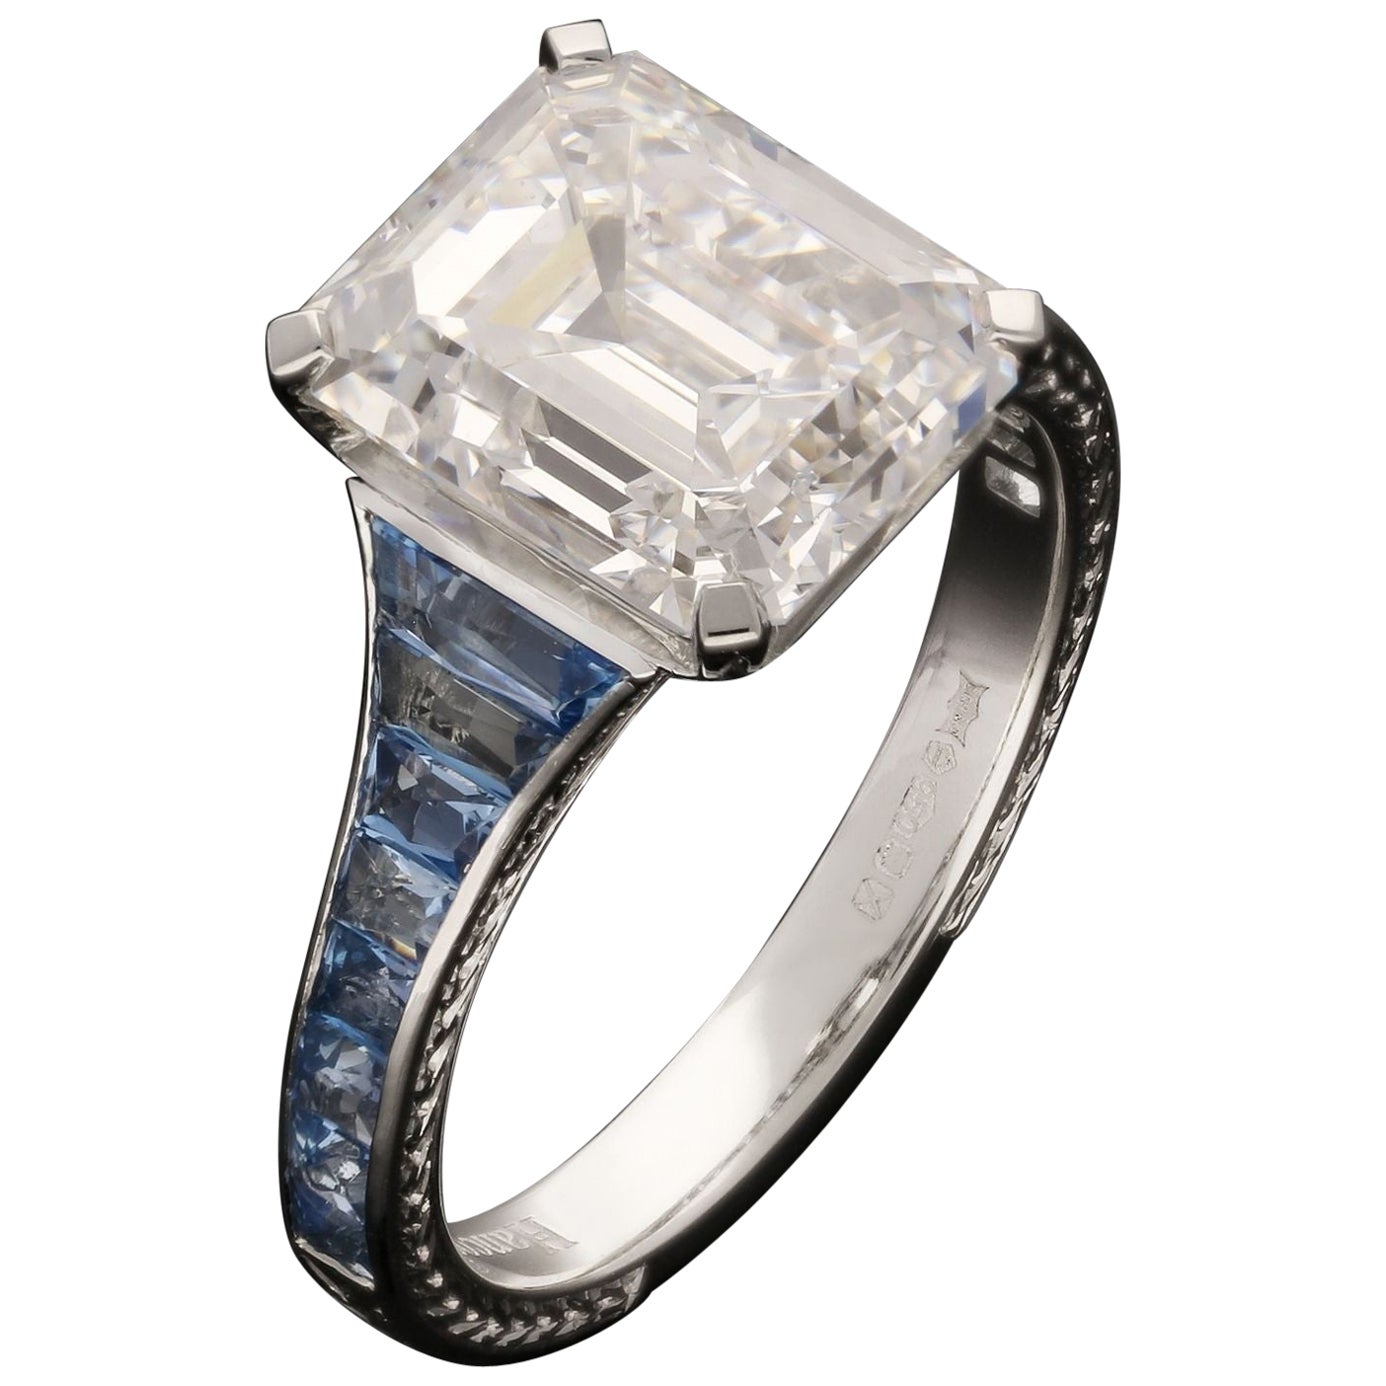 Hancocks 4.48ct Emerald Cut Diamond Ring with Aquamarine Shoulders in Platinum For Sale